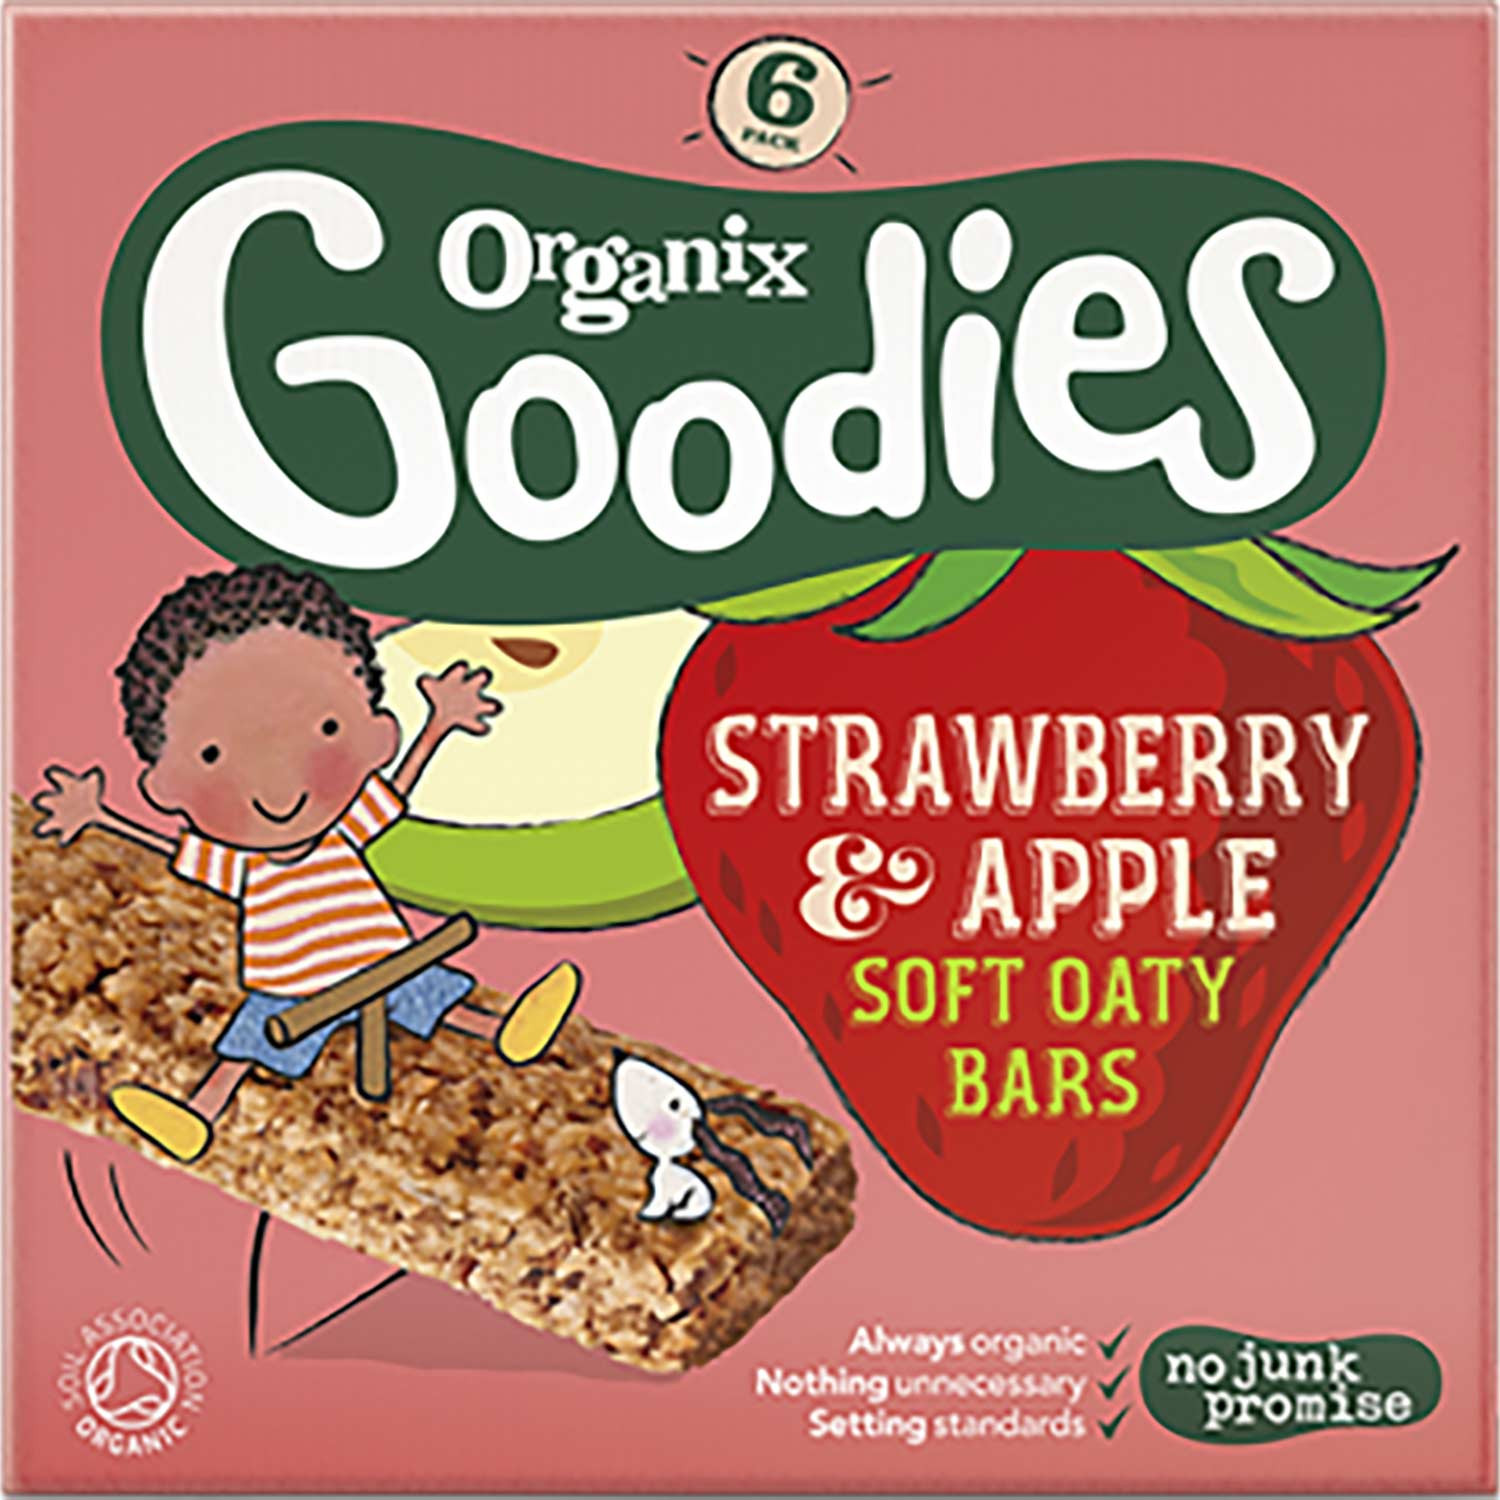 Organix Goodies Organic Soft Oaty Bars - Strawberry & Apple, 6 x 30 g